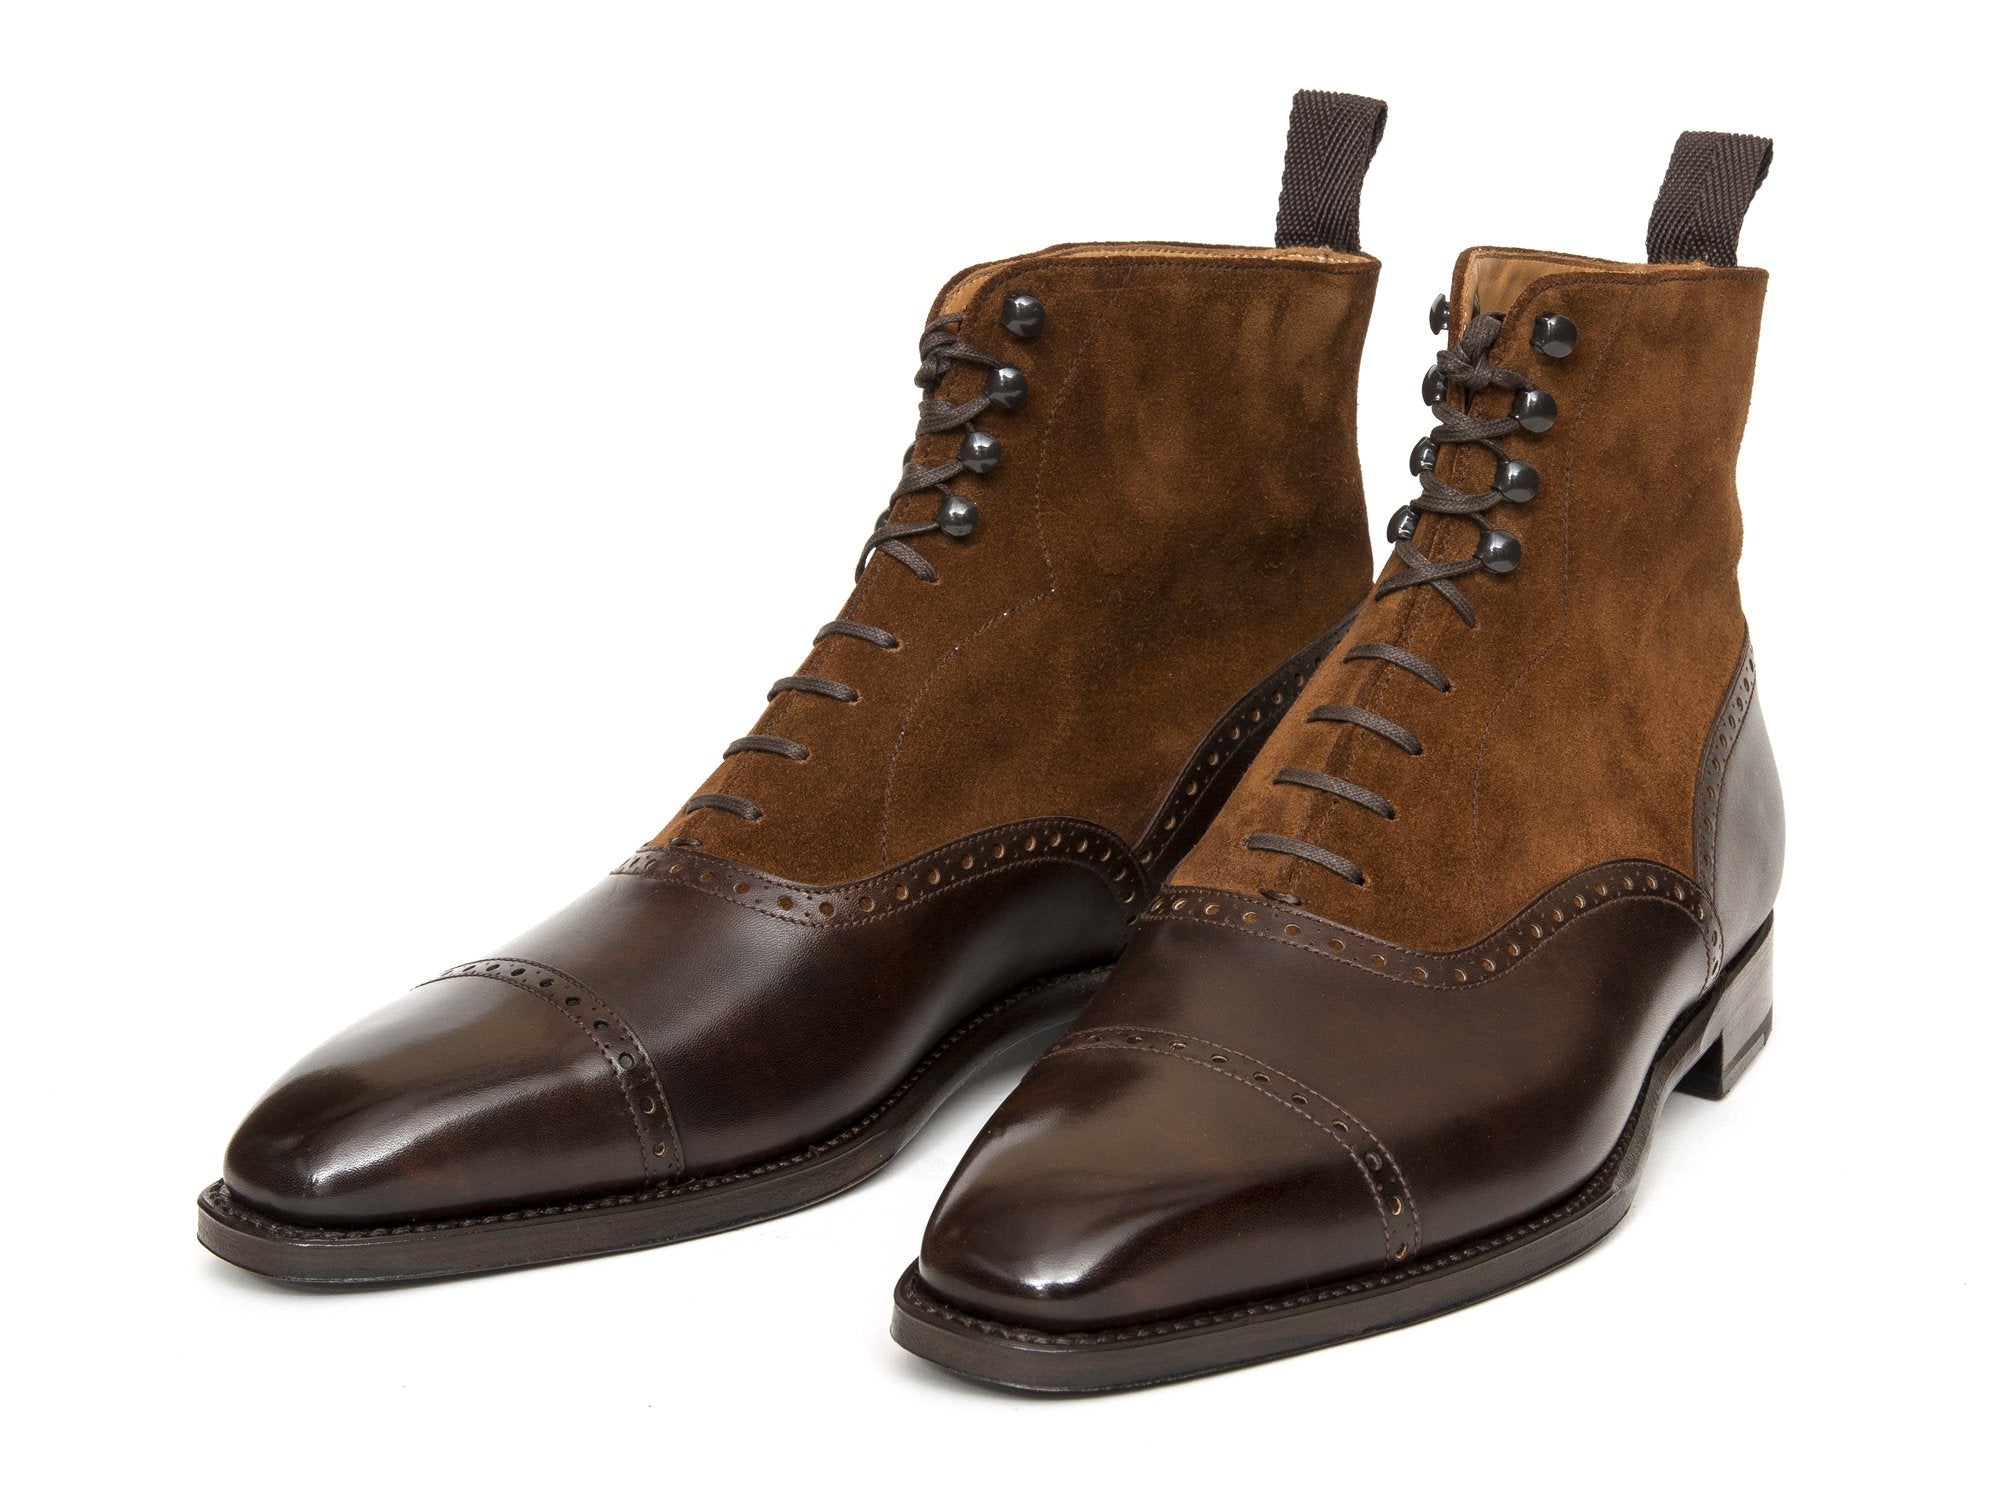 J.FitzPatrick Footwear - David - Dark Brown Museum Calf / Snuff Suede - LPB Last - Single Leather Sole